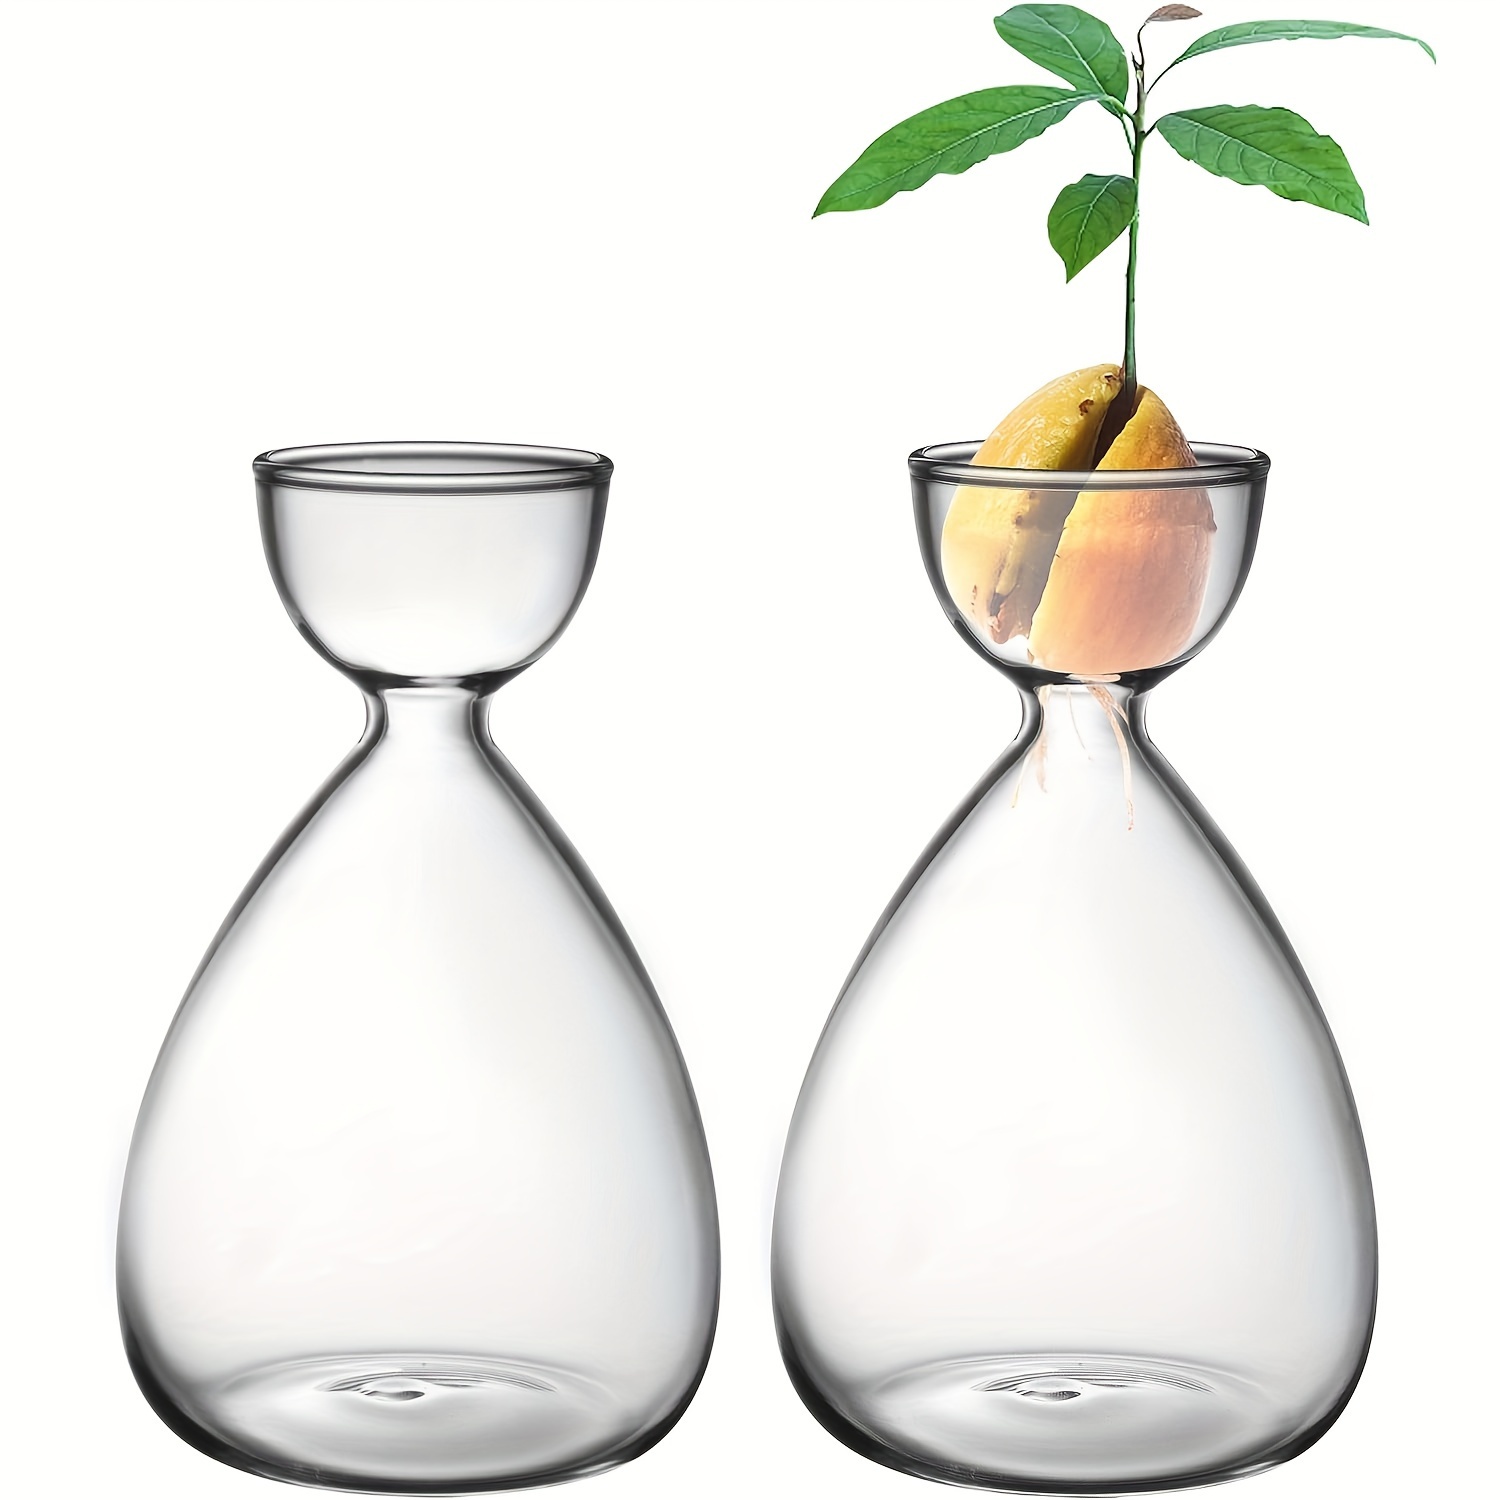 

2pcs Small Avocado Seed Glass Vase, Avocado Tree Growth Kit, Hydroponic Vase, Home Decoration, Kitchen, Office Windowsill Decoration